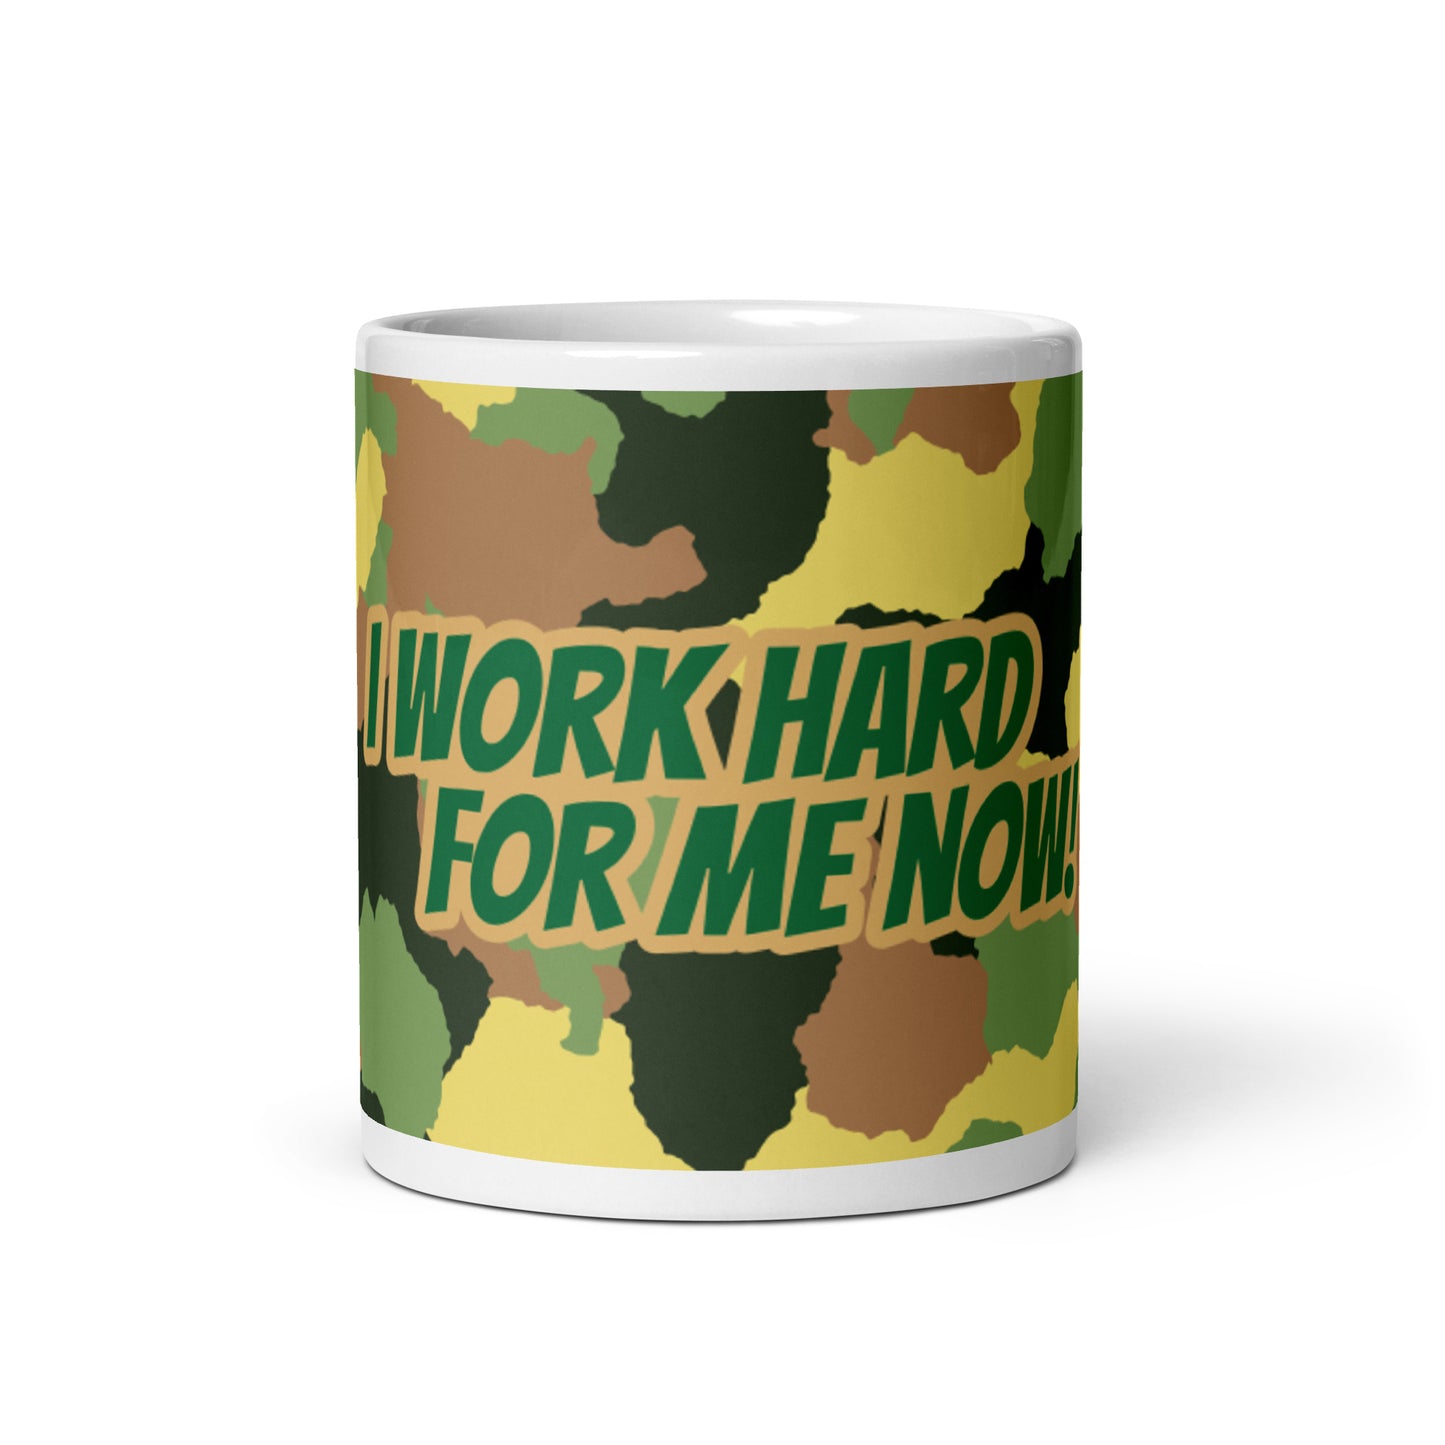 Army Camo White Glossy Mug - I work hard for me now!